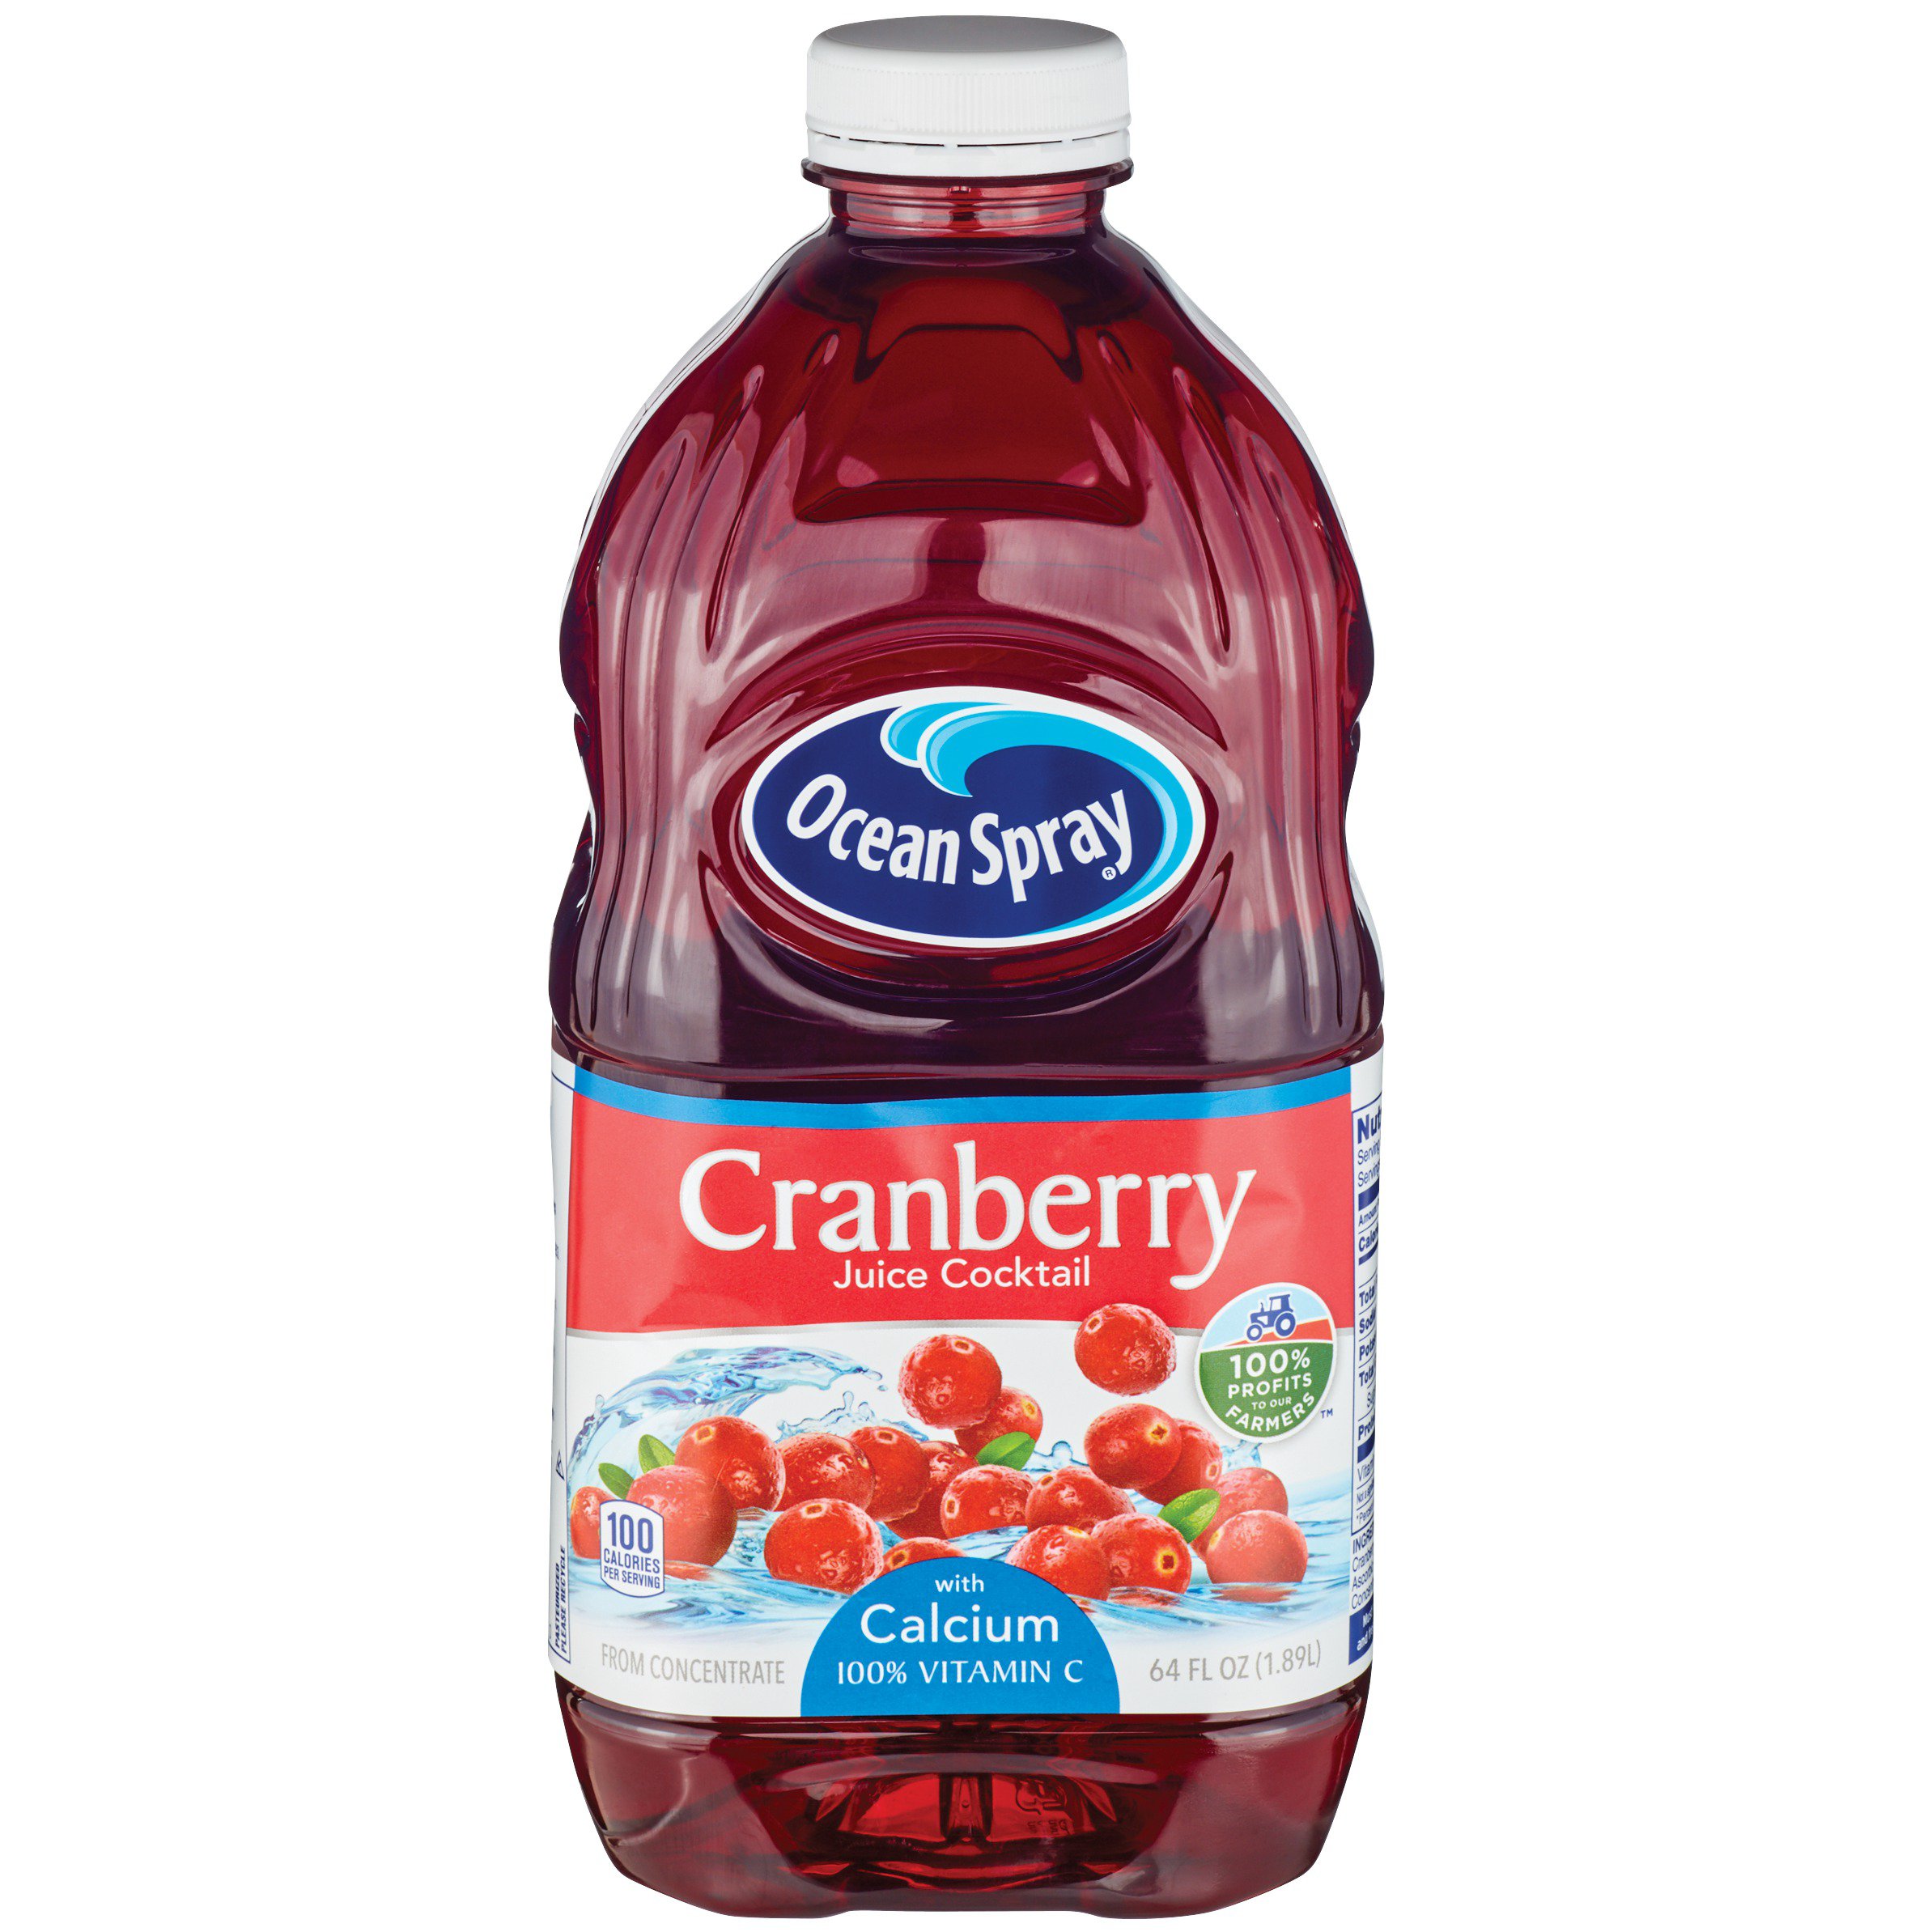 Cranberry Juice Cocktail with Calcium